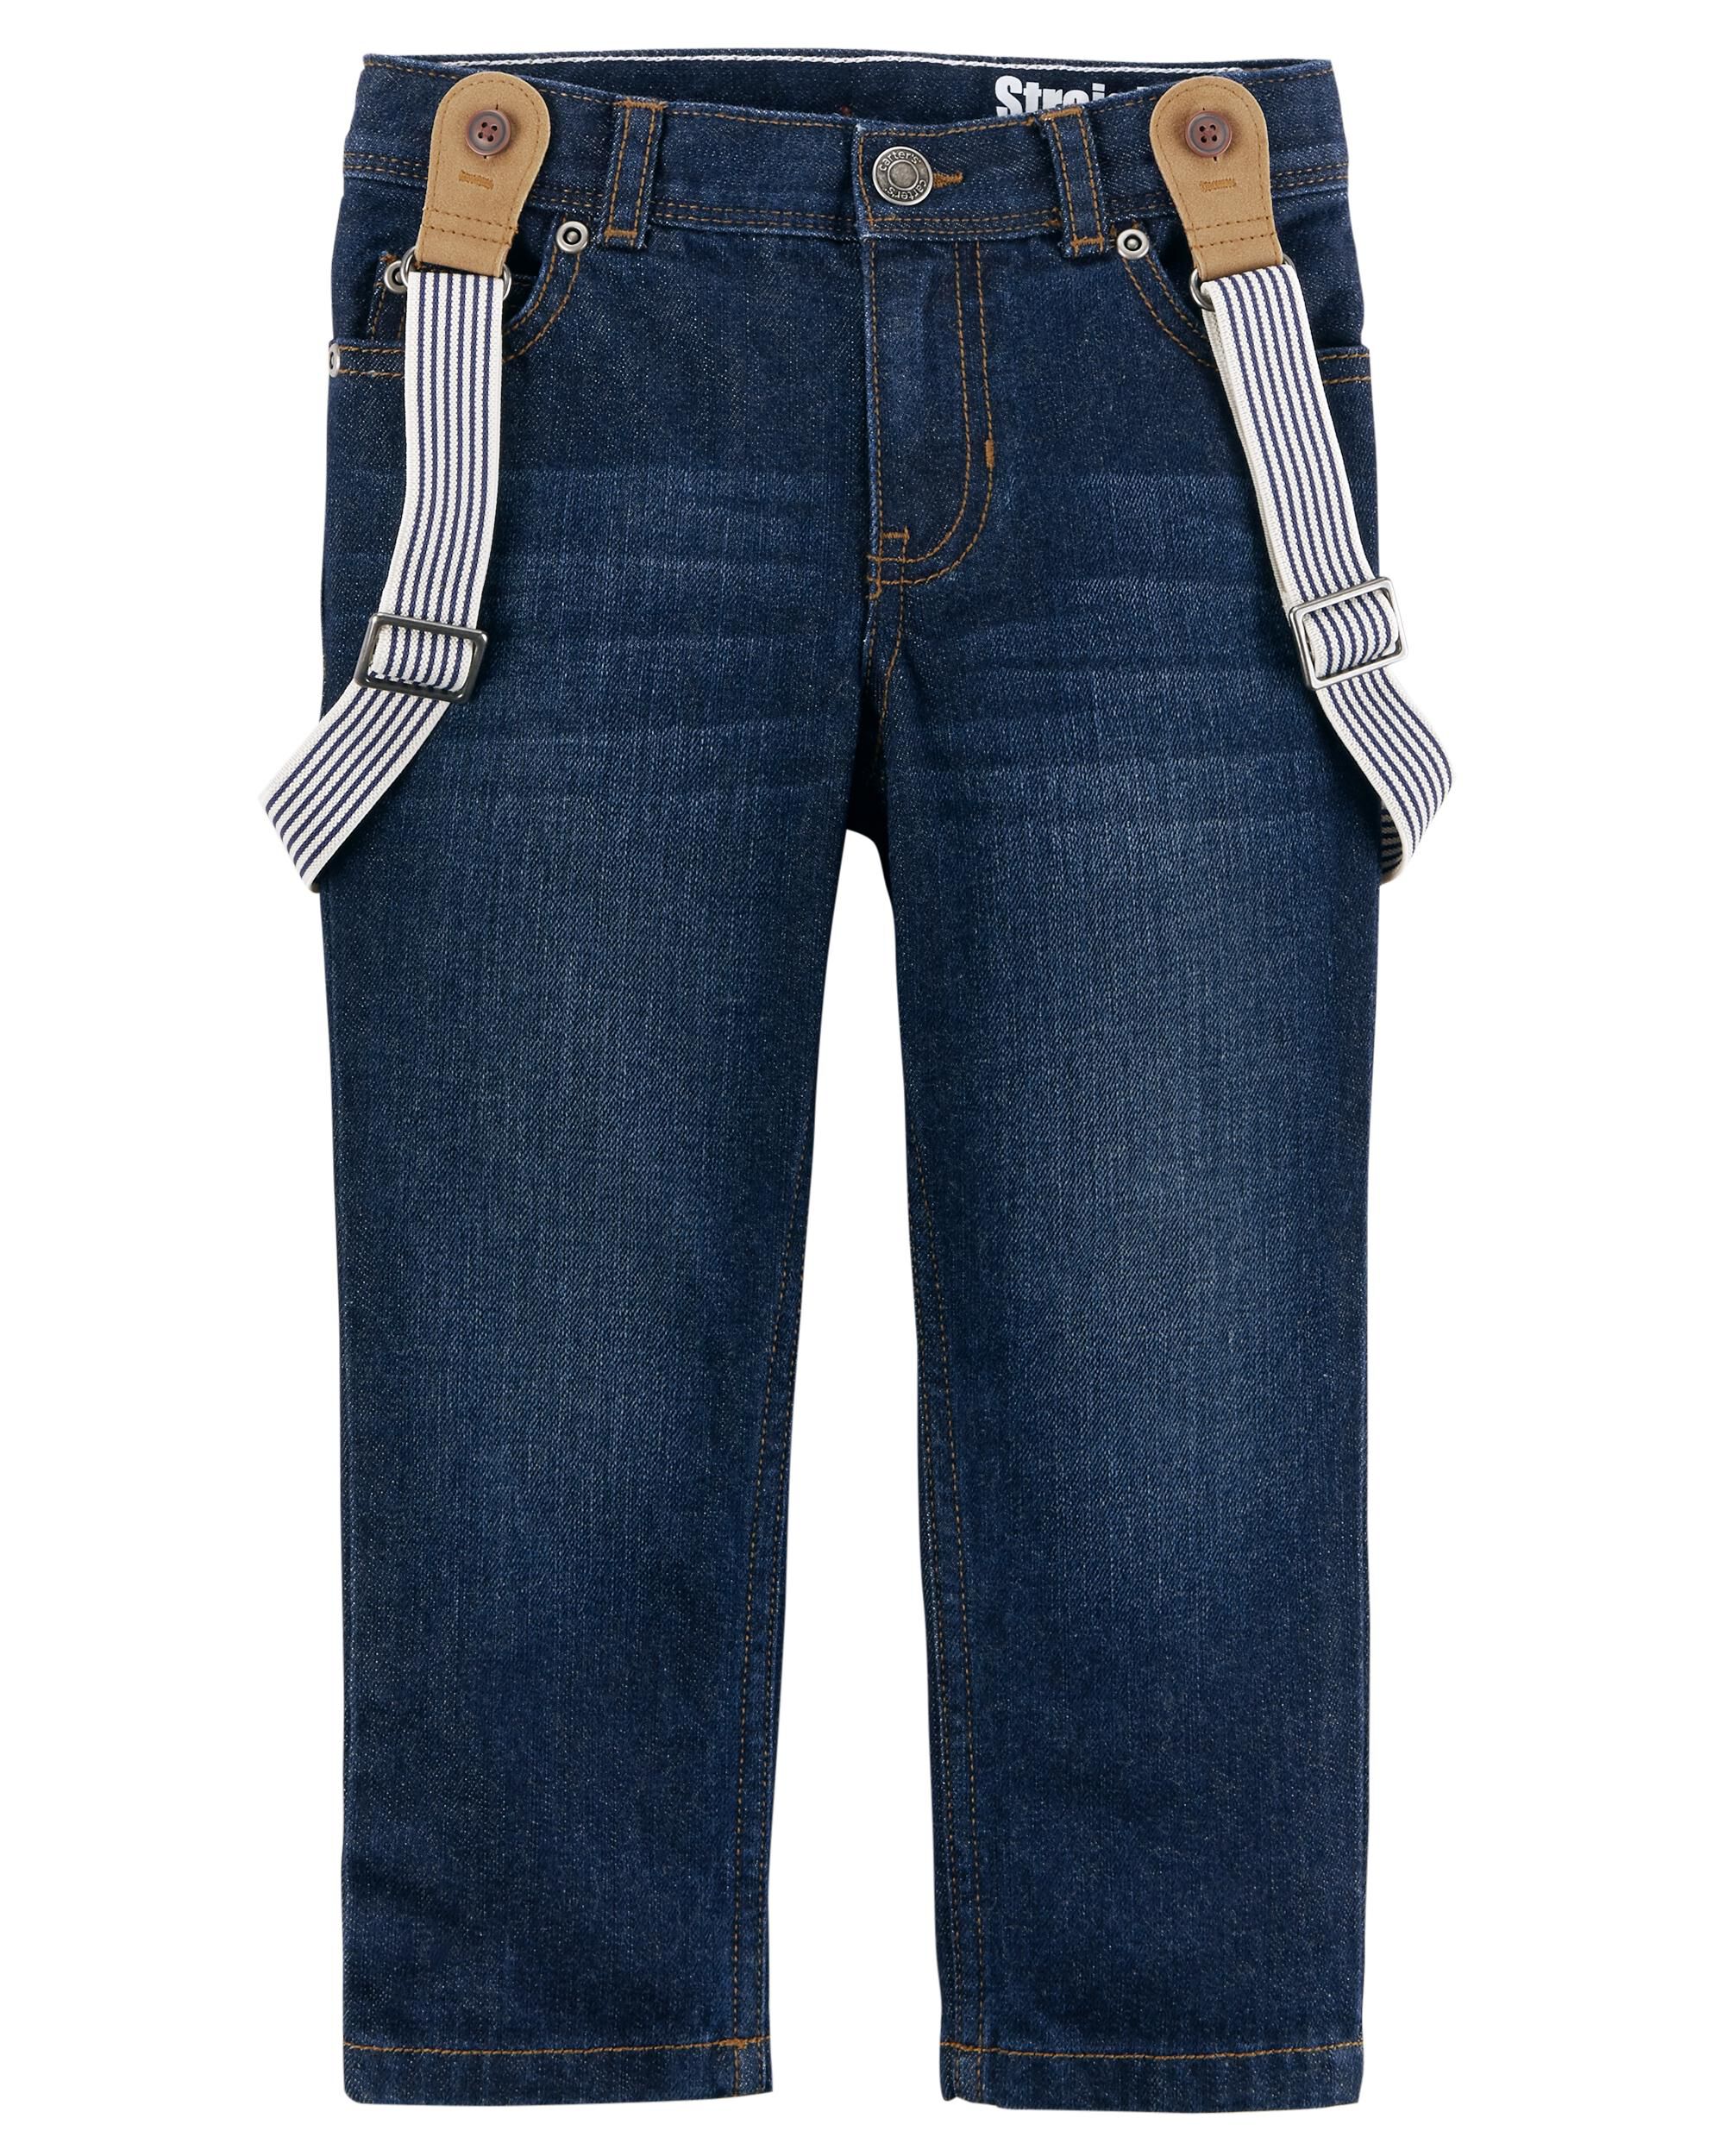 newborn jeans with suspenders